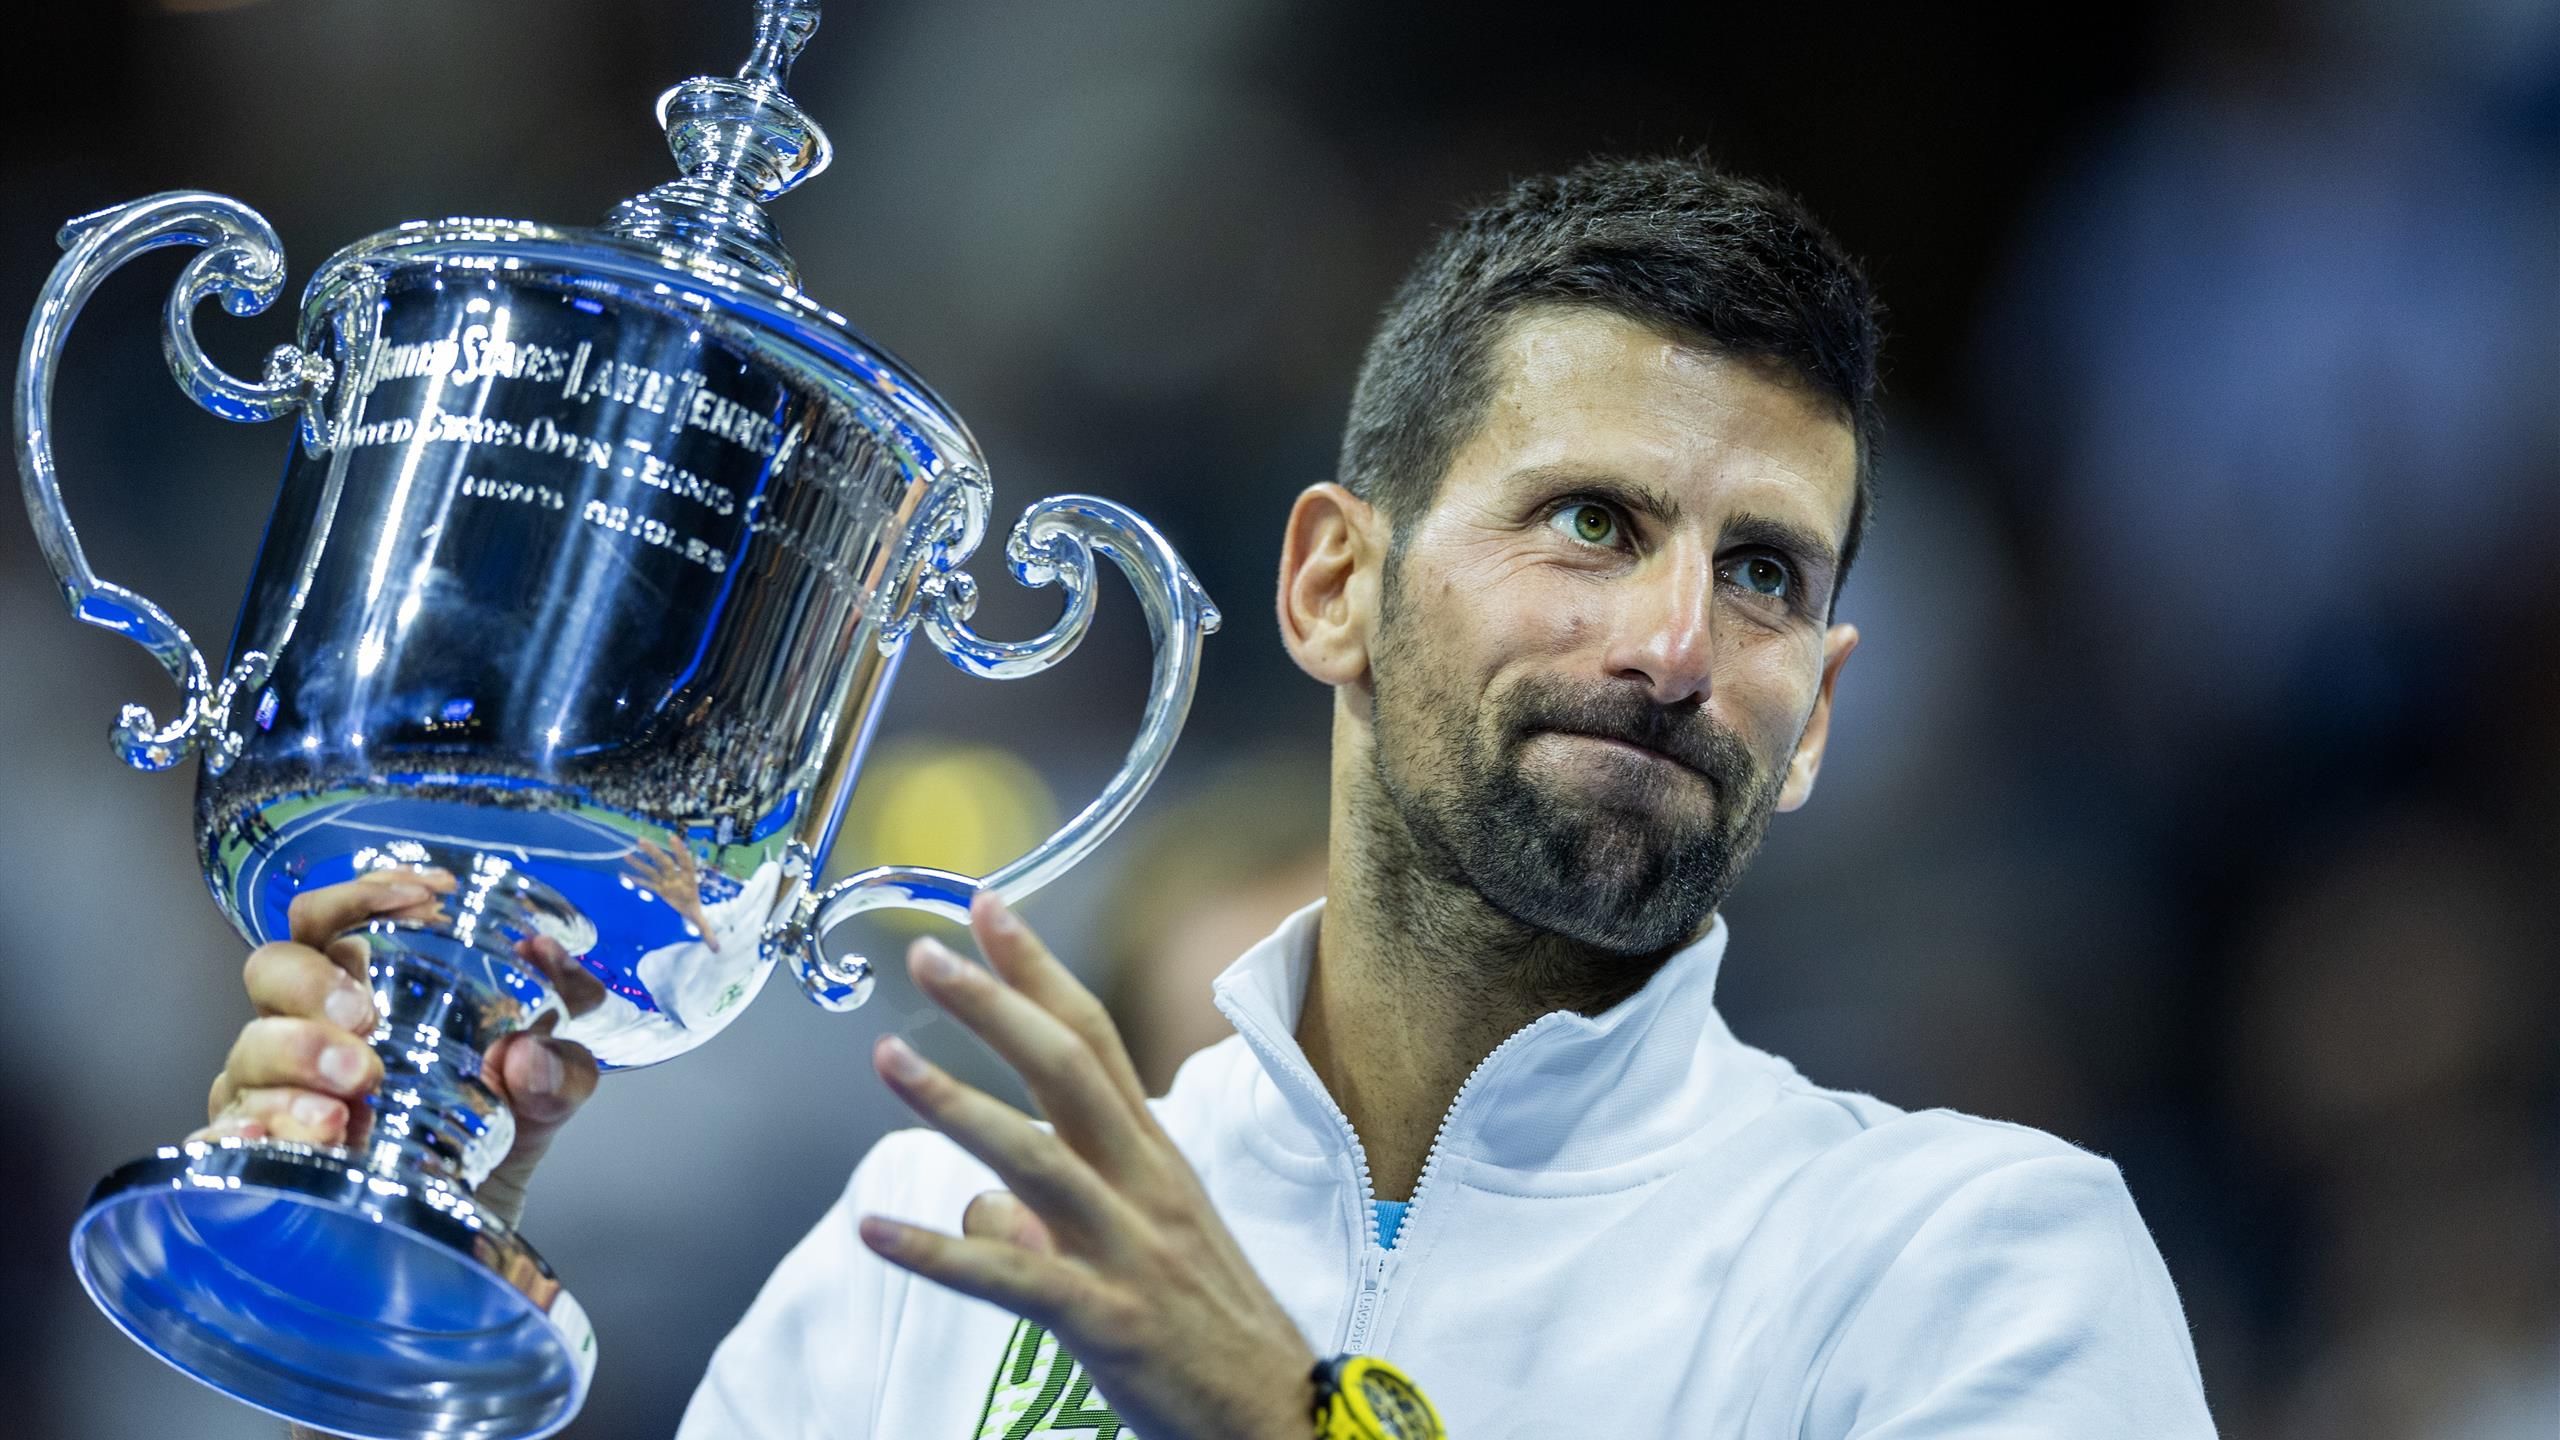 Men's Tennis, ATP Singles World Rankings - complete list - Novak Djokovic  reaches 400 weeks as No. 1